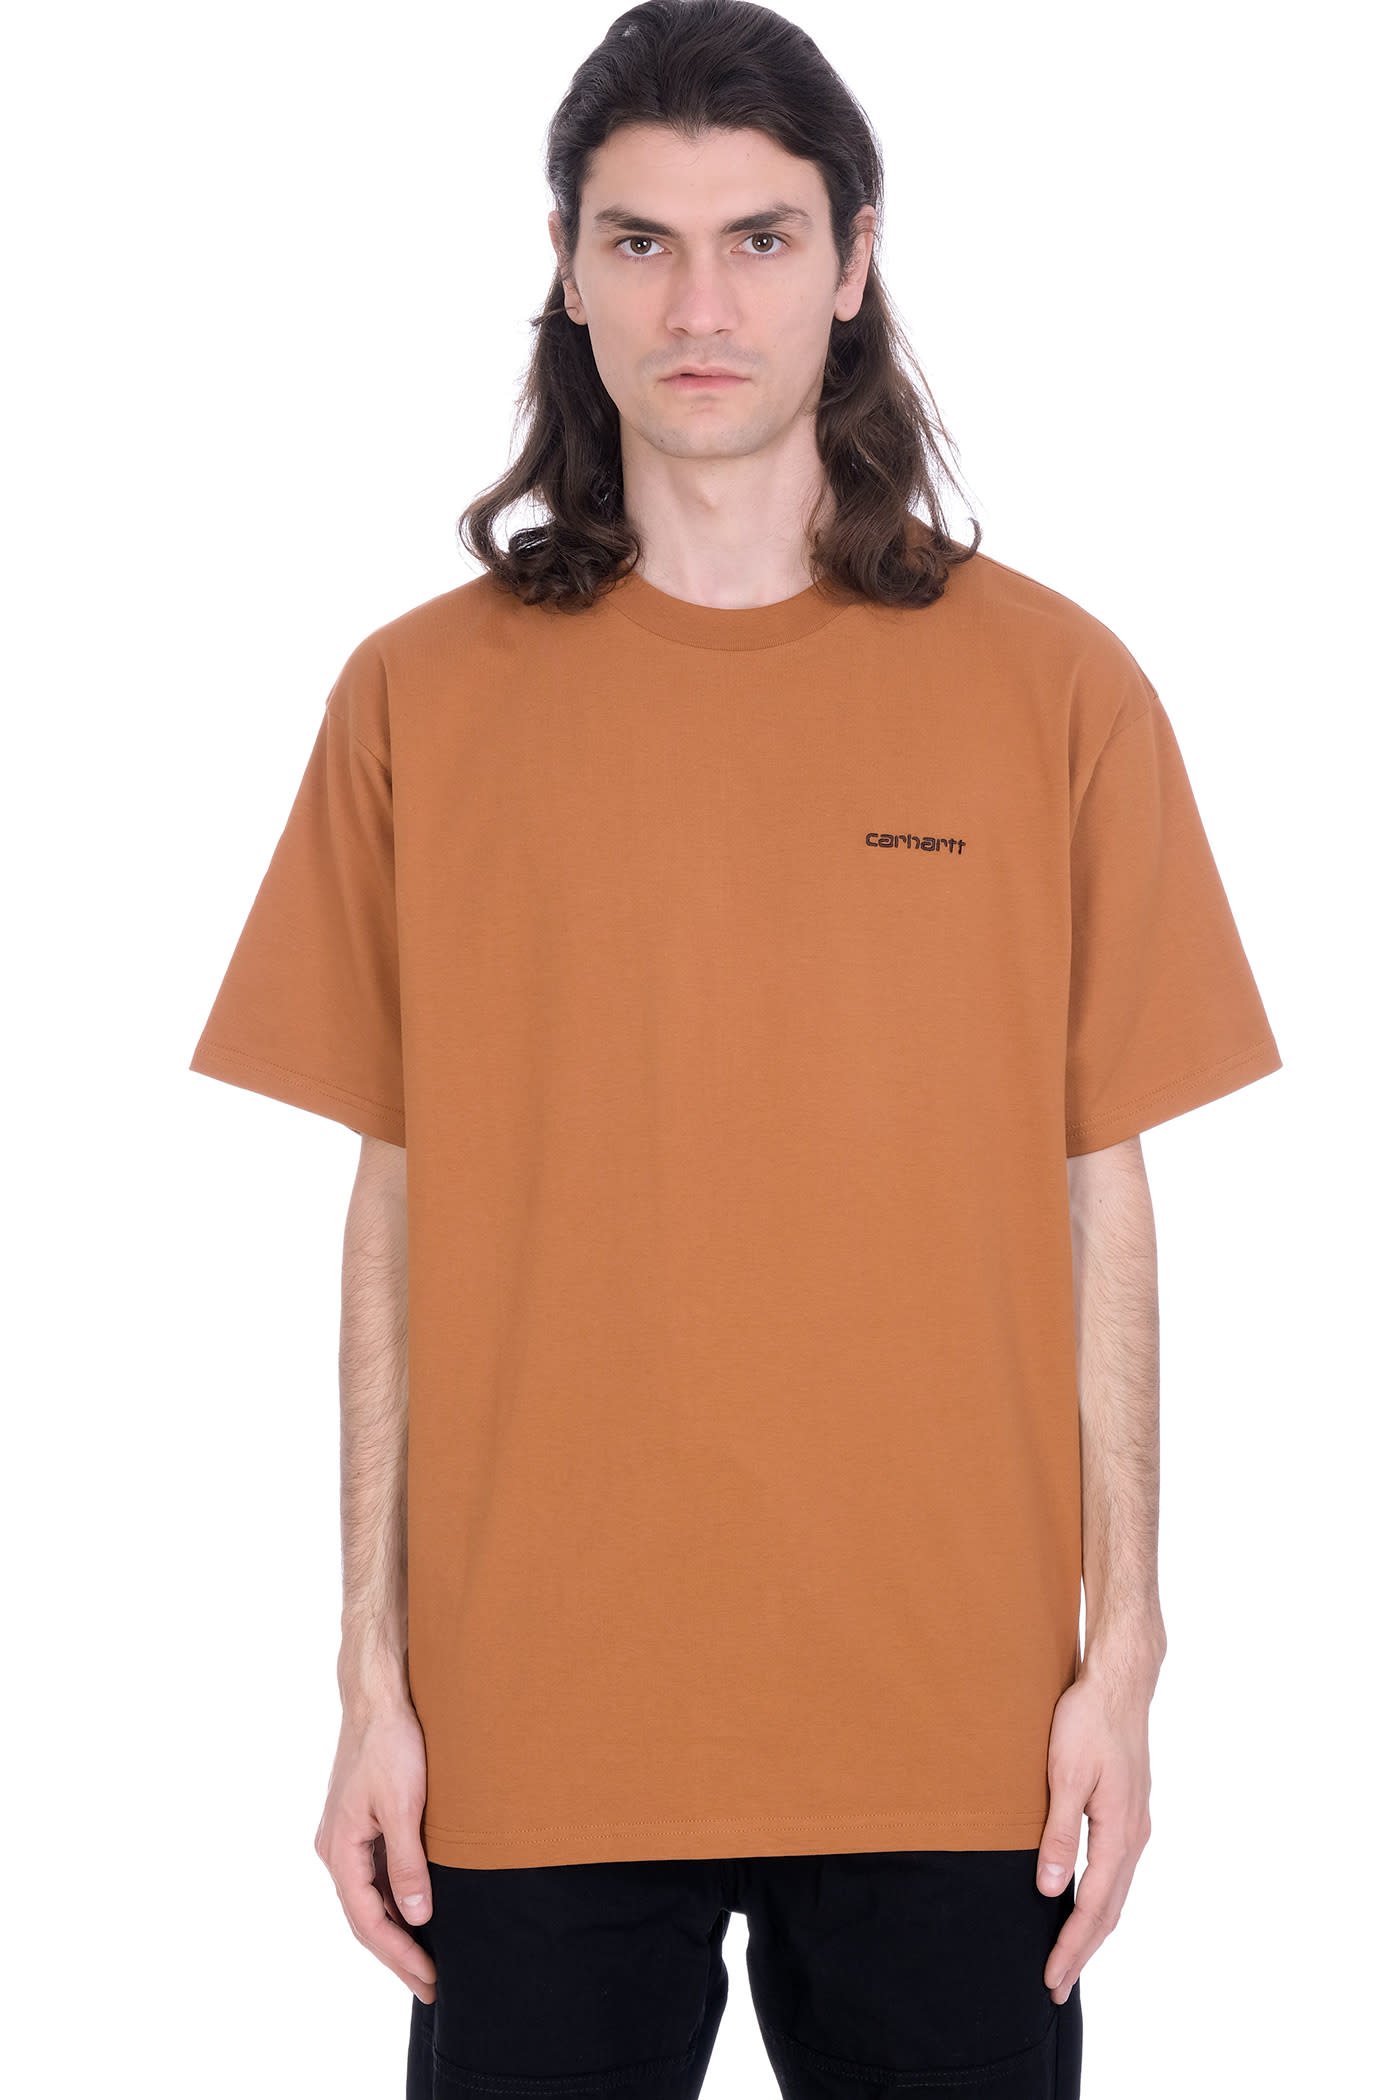 Carhartt T-shirt In Brown Cotton